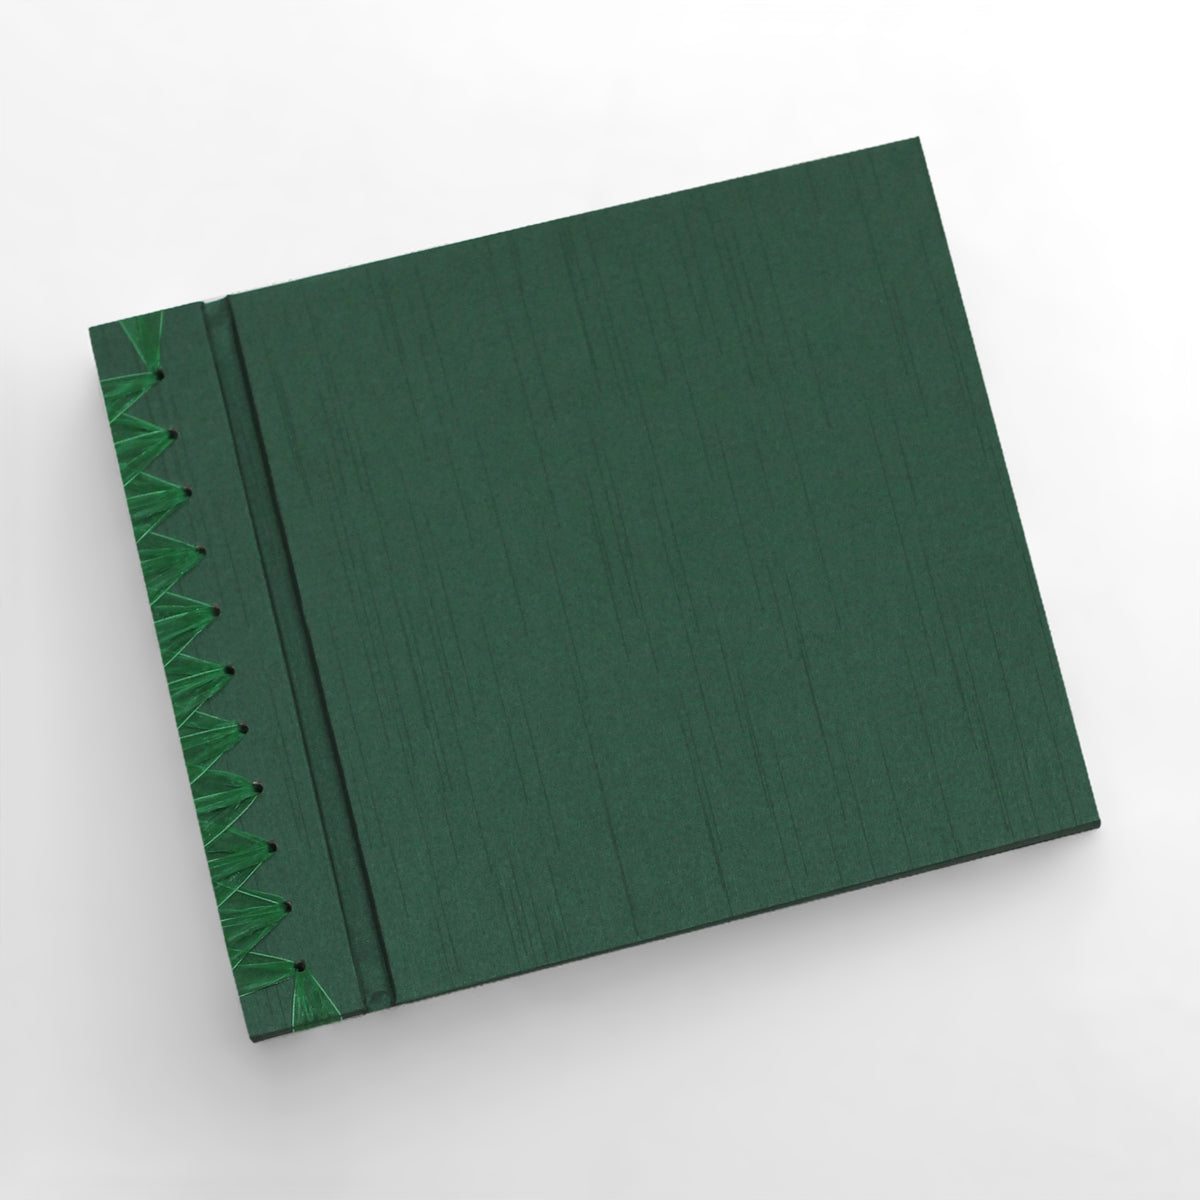 12 x 15 Deluxe Album with Emerald Silk Cover